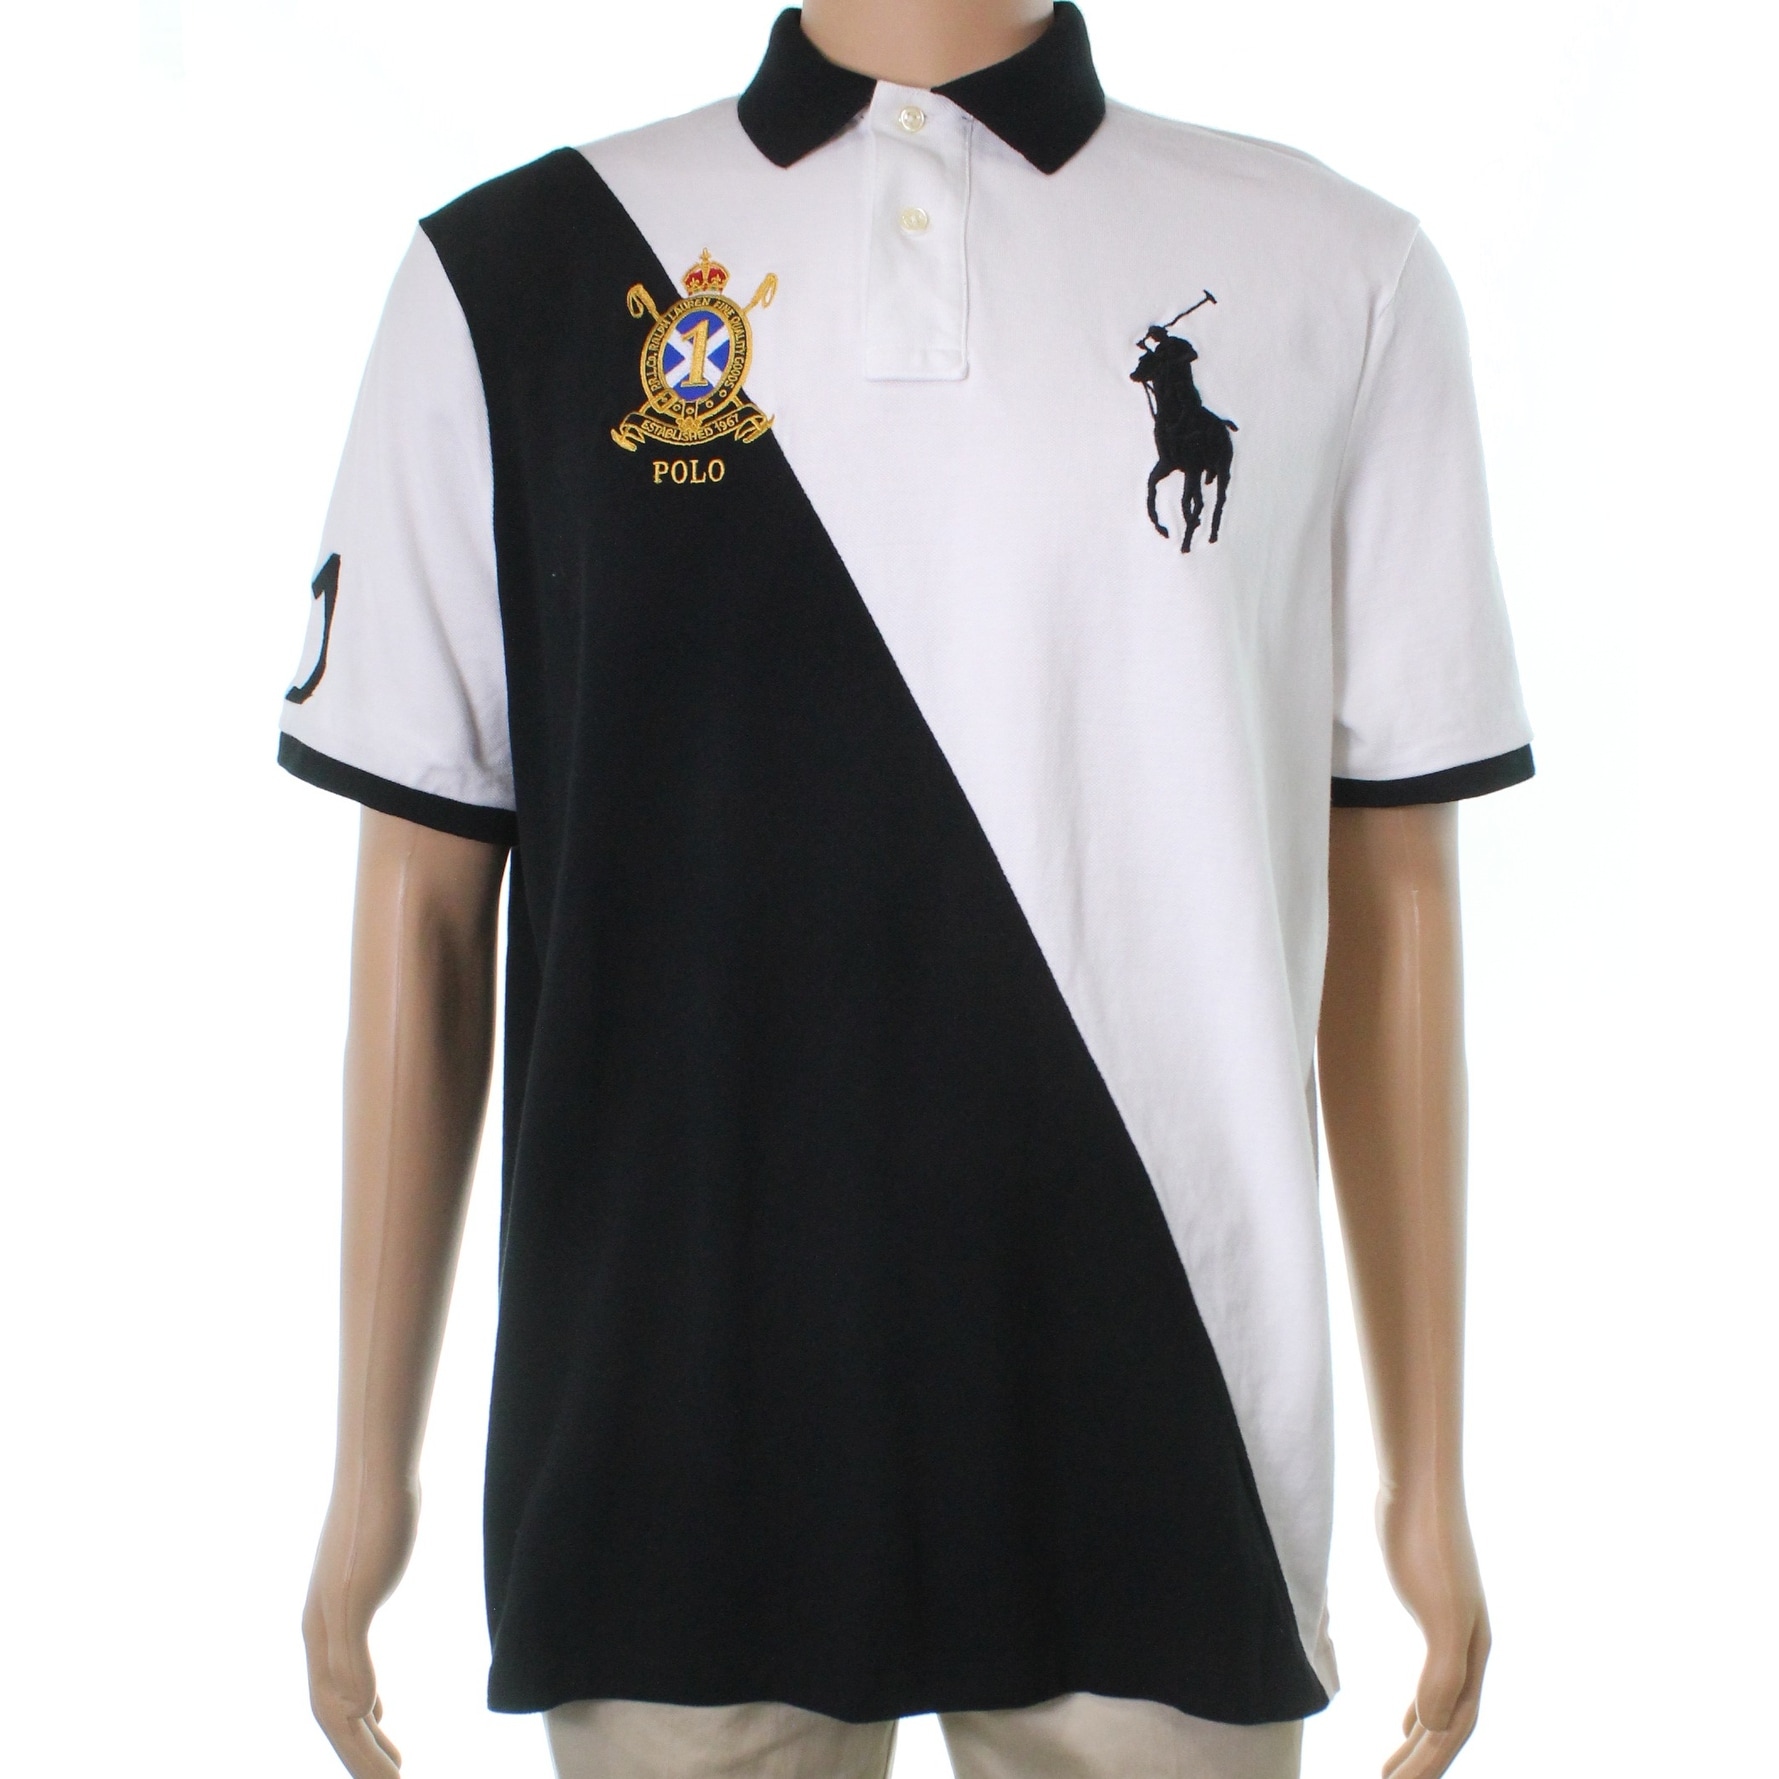 black and white ralph lauren polo shirt